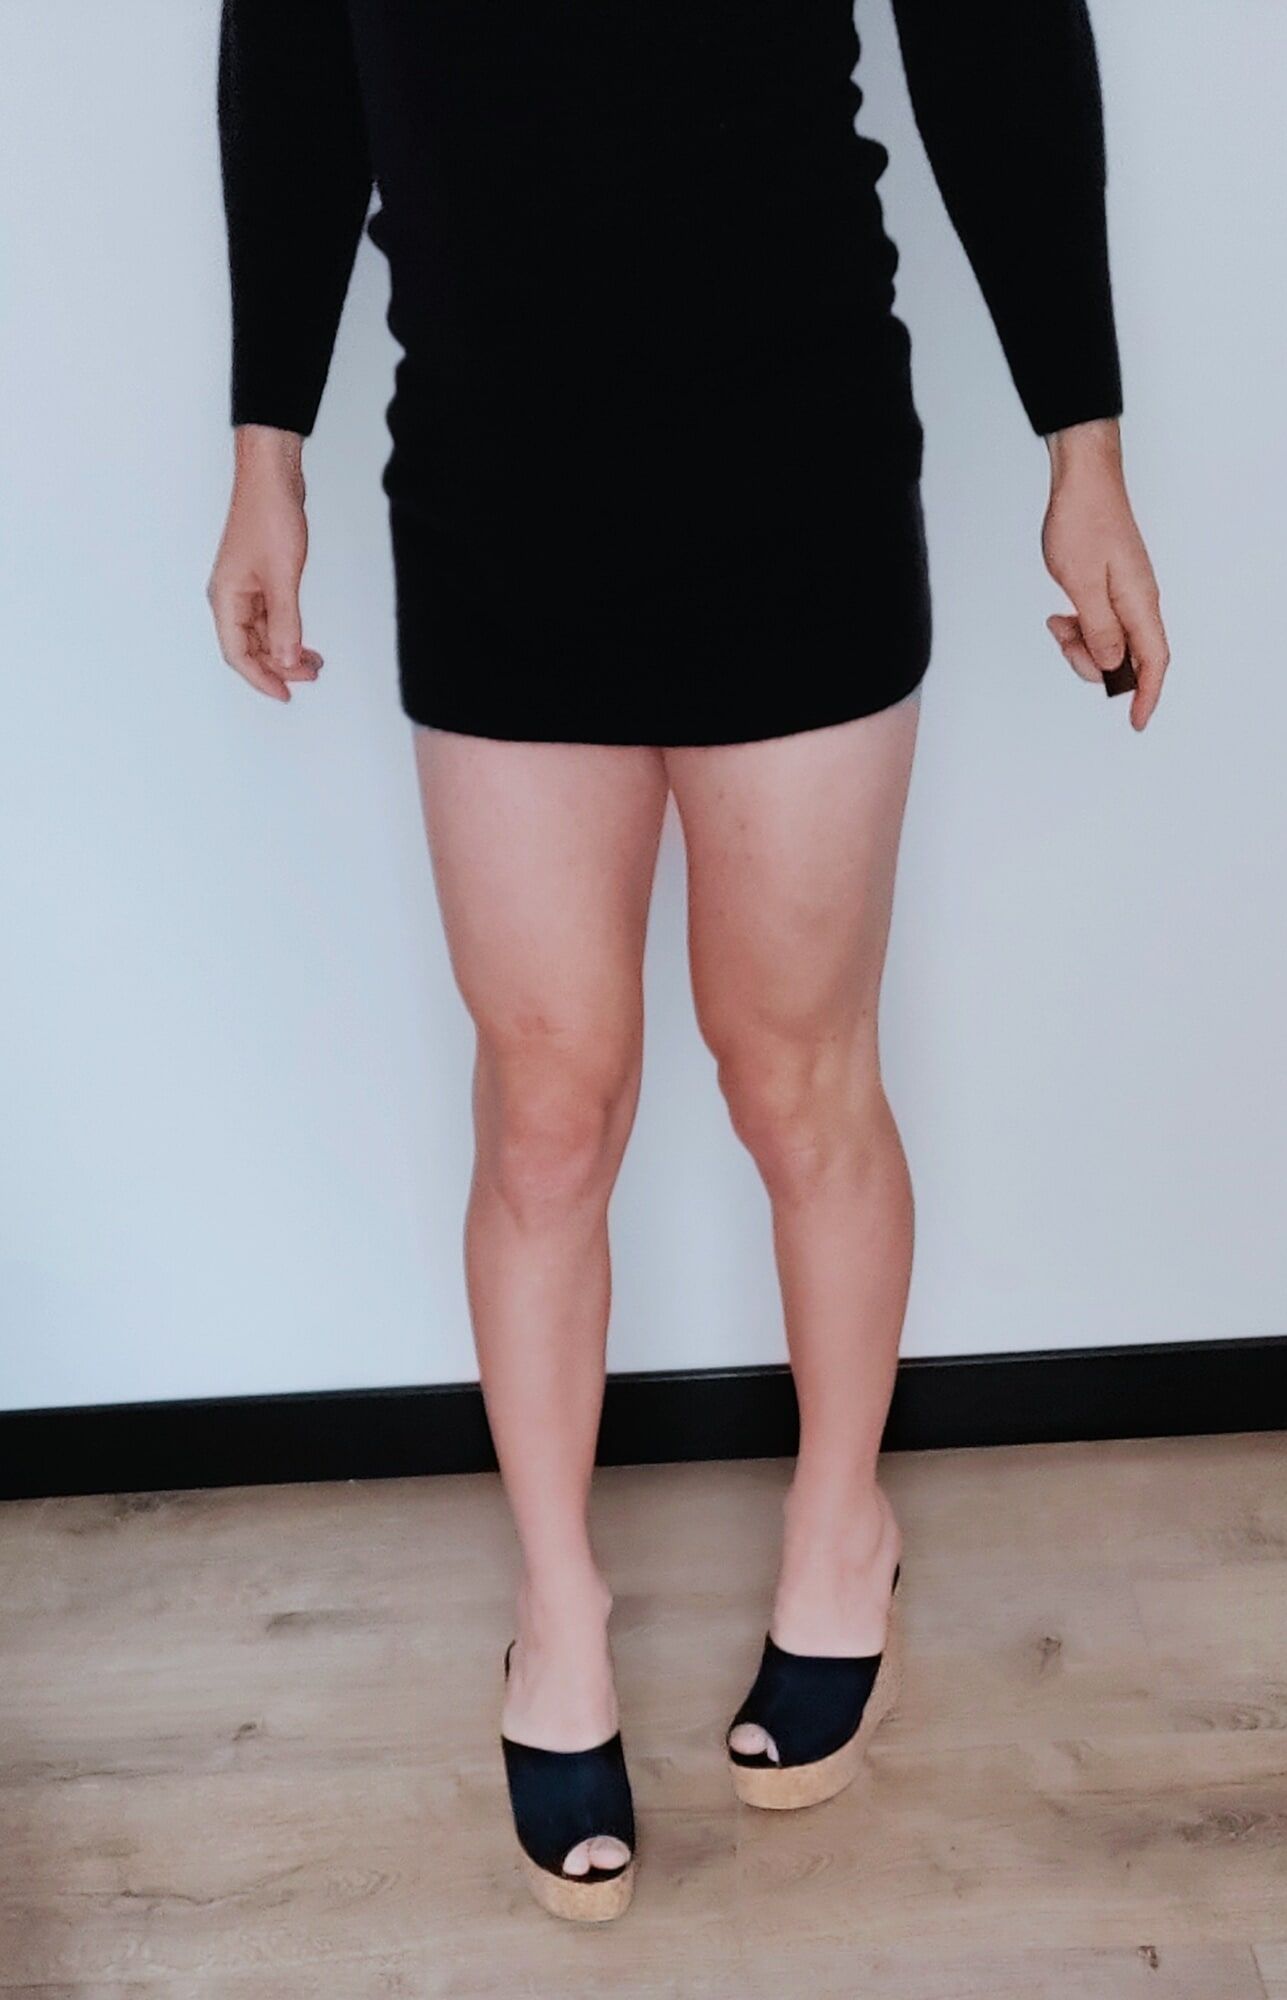 Crossdresser sexy leg